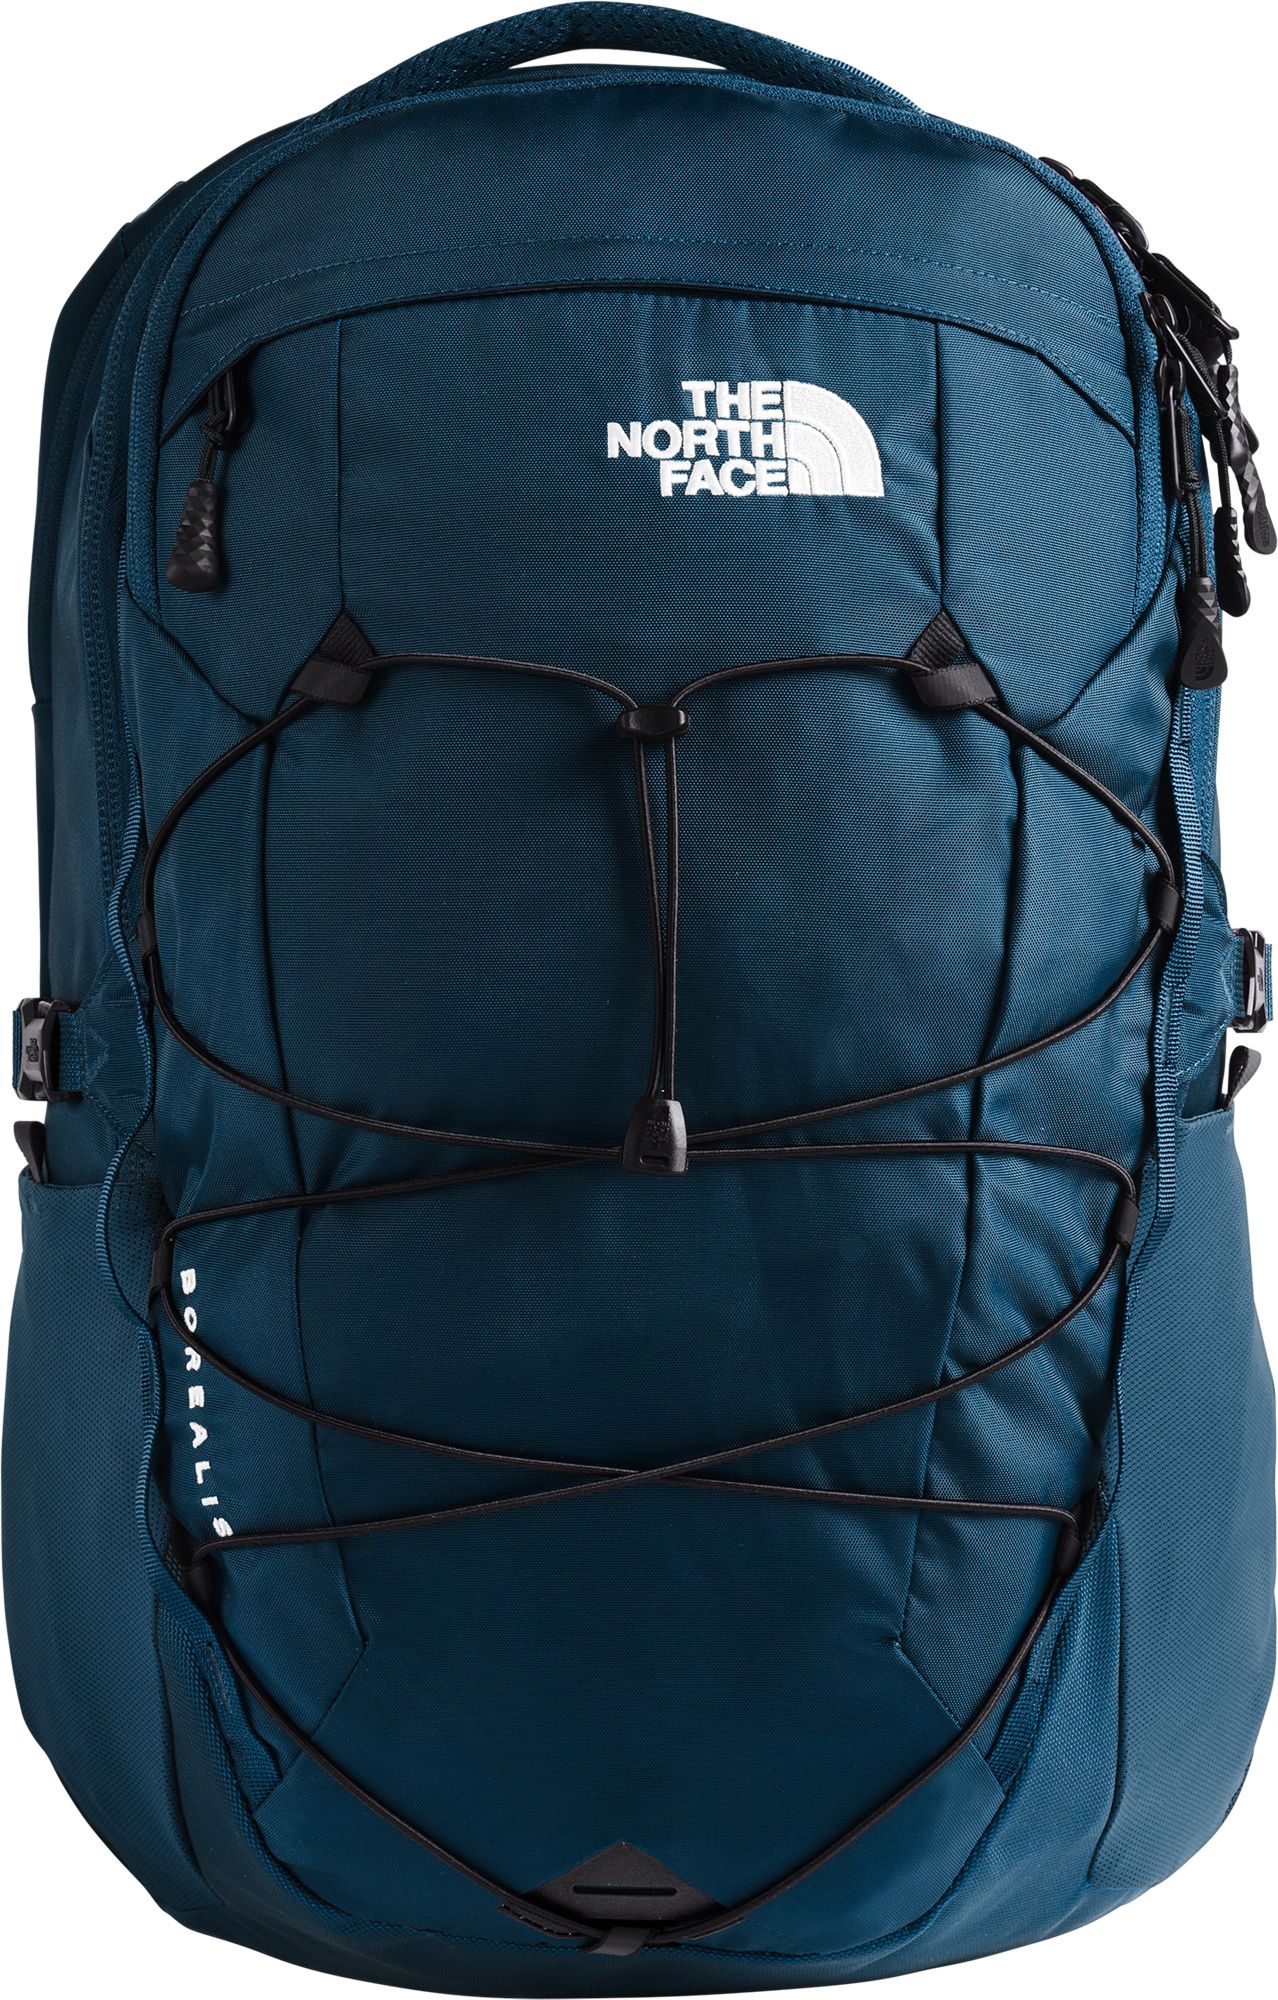 borealis backpack size